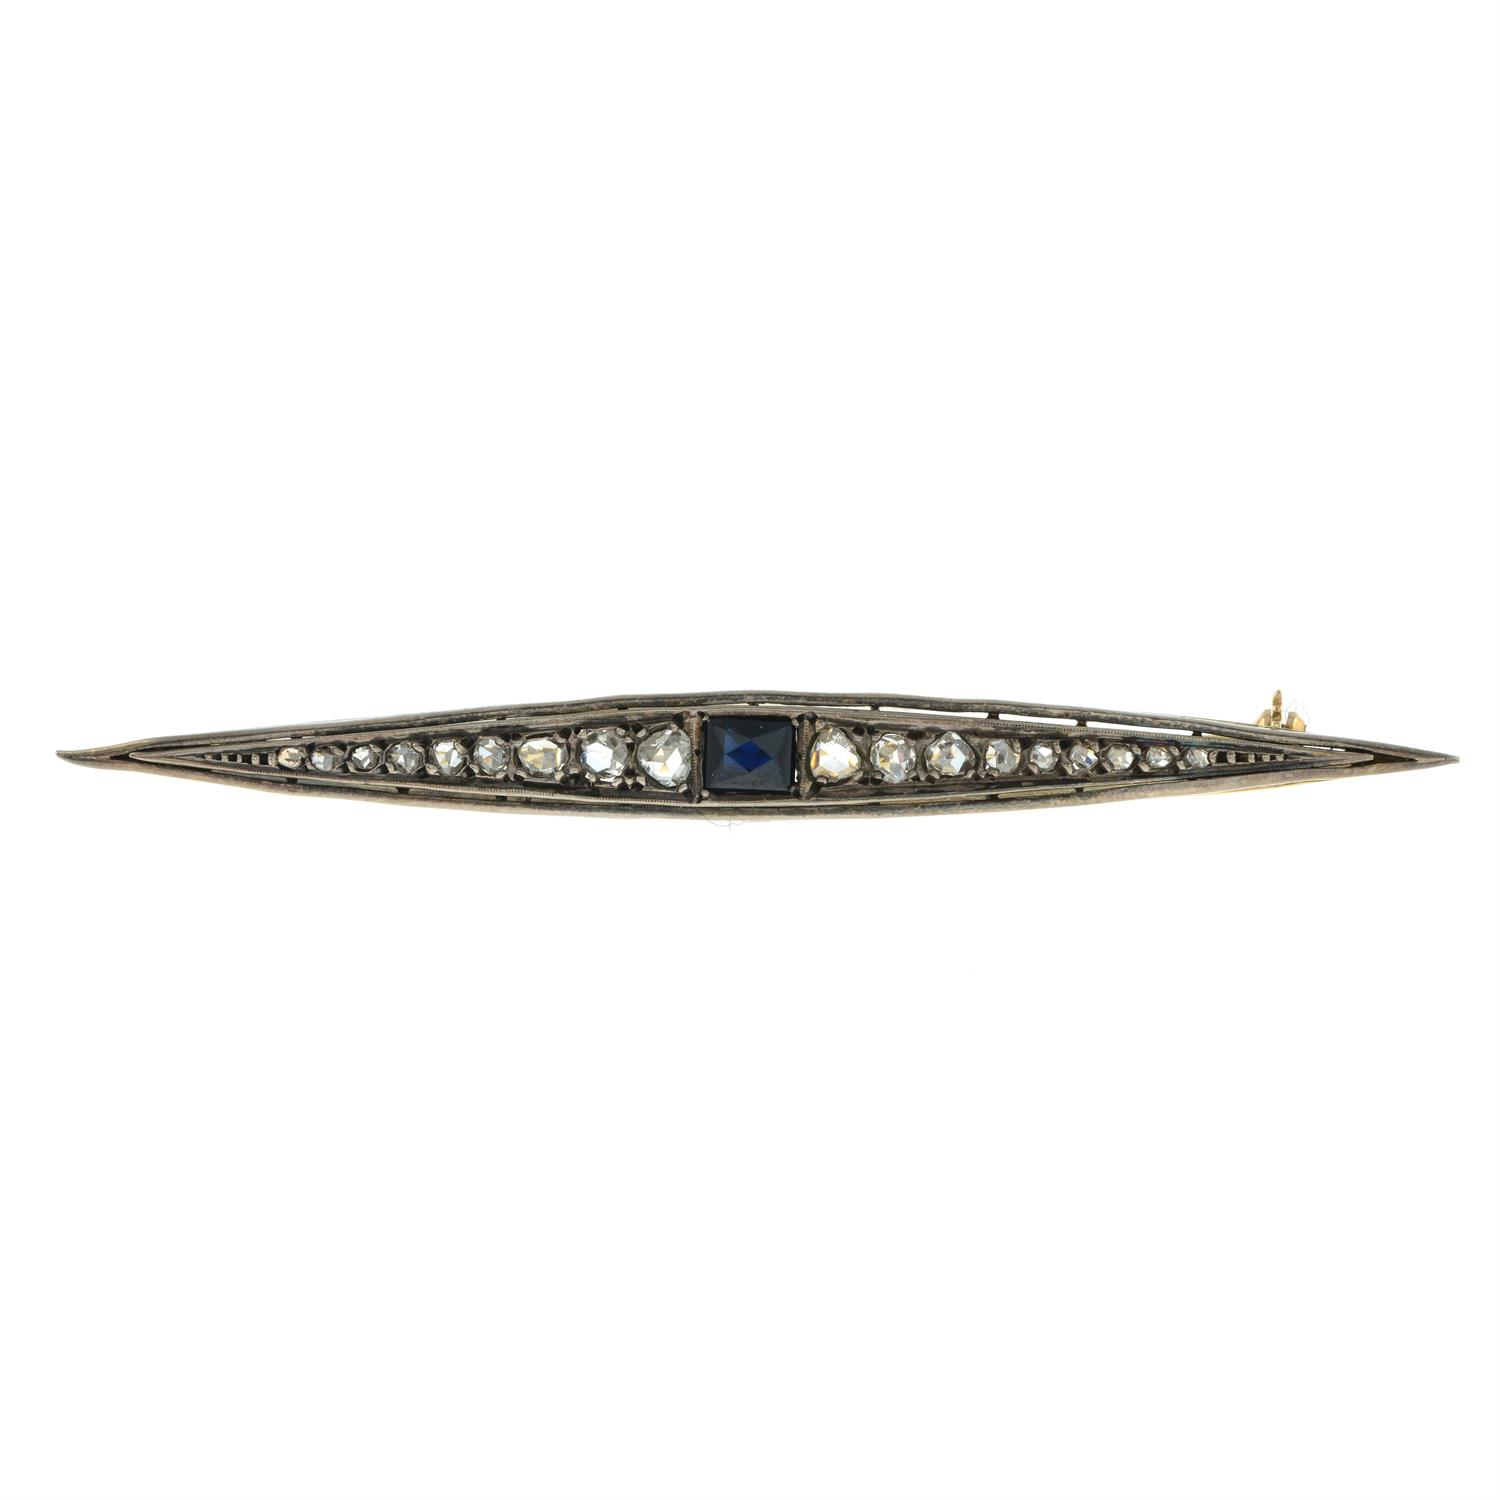 Early 20th century sapphire & diamond brooch